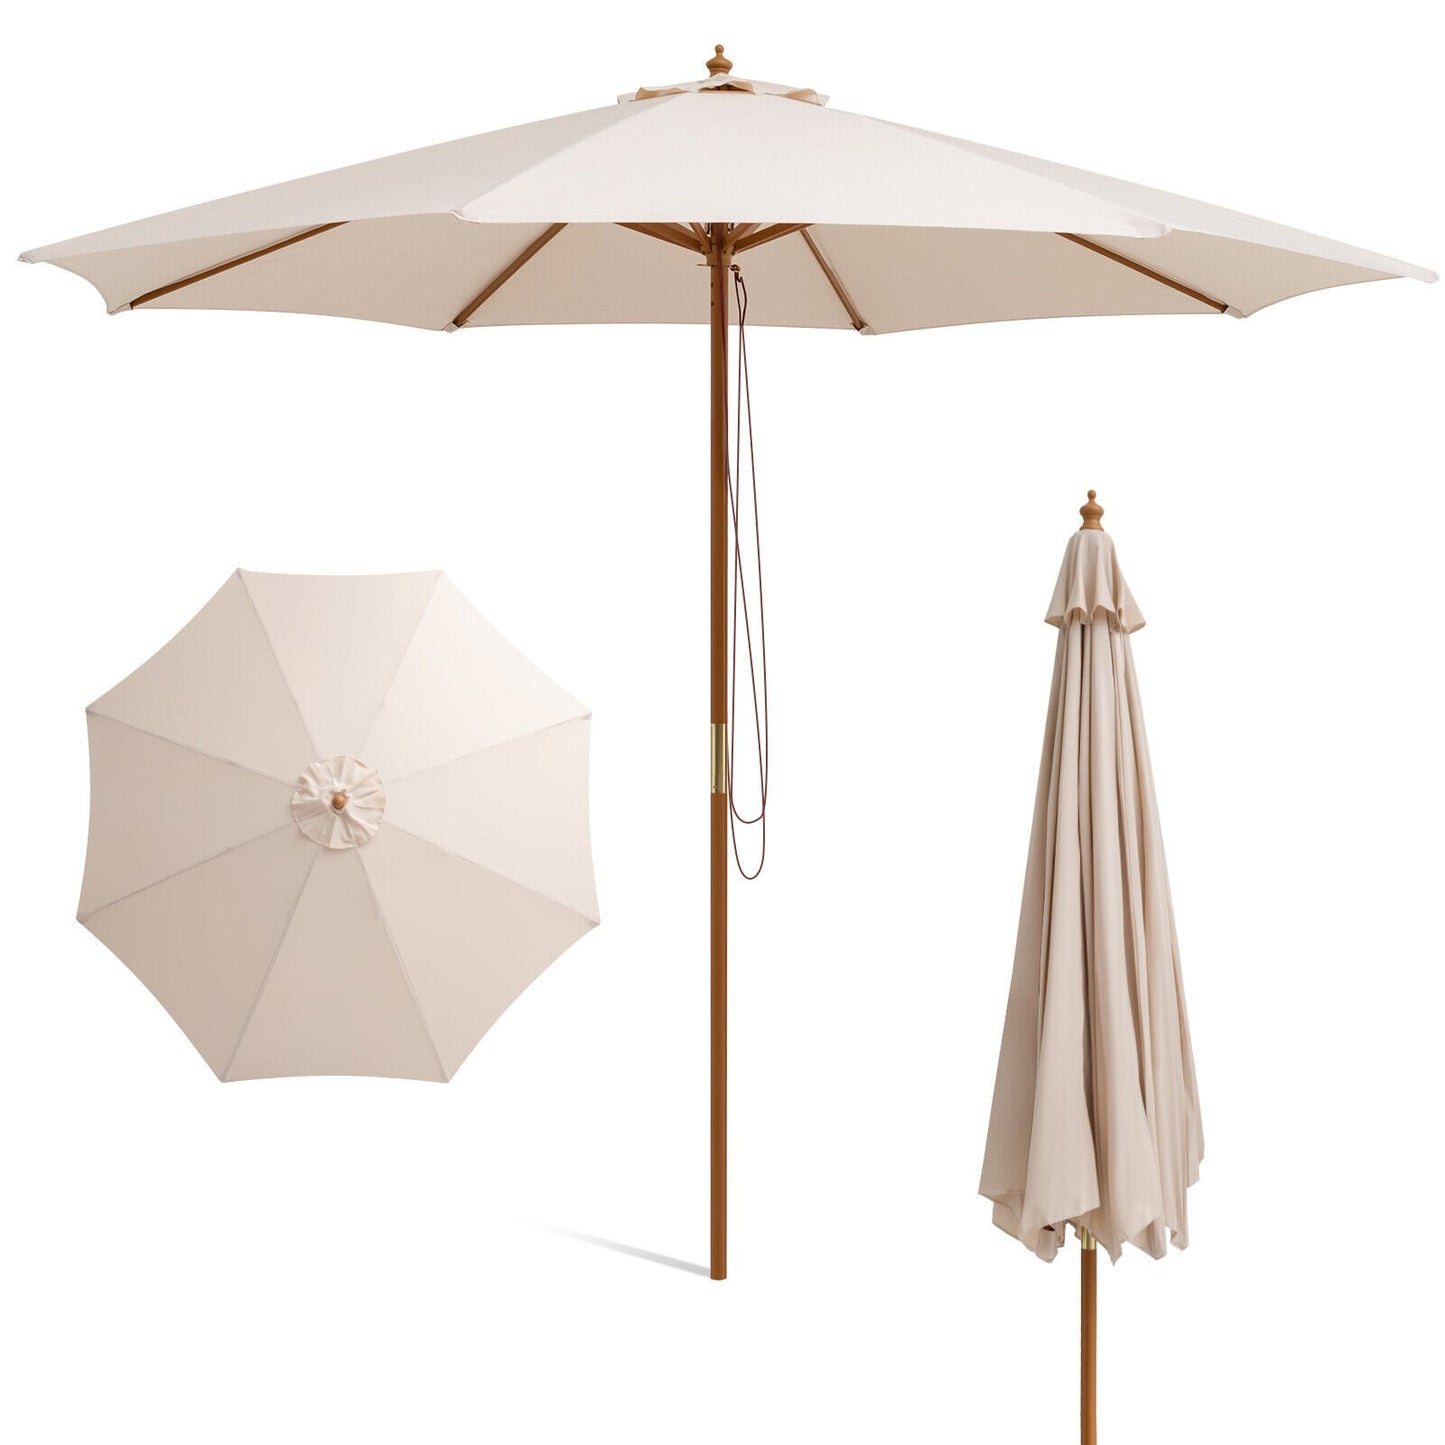 Adjustable 10 Feet Wooden Outdoor Umbrella Sunshade, Beige - Gallery Canada